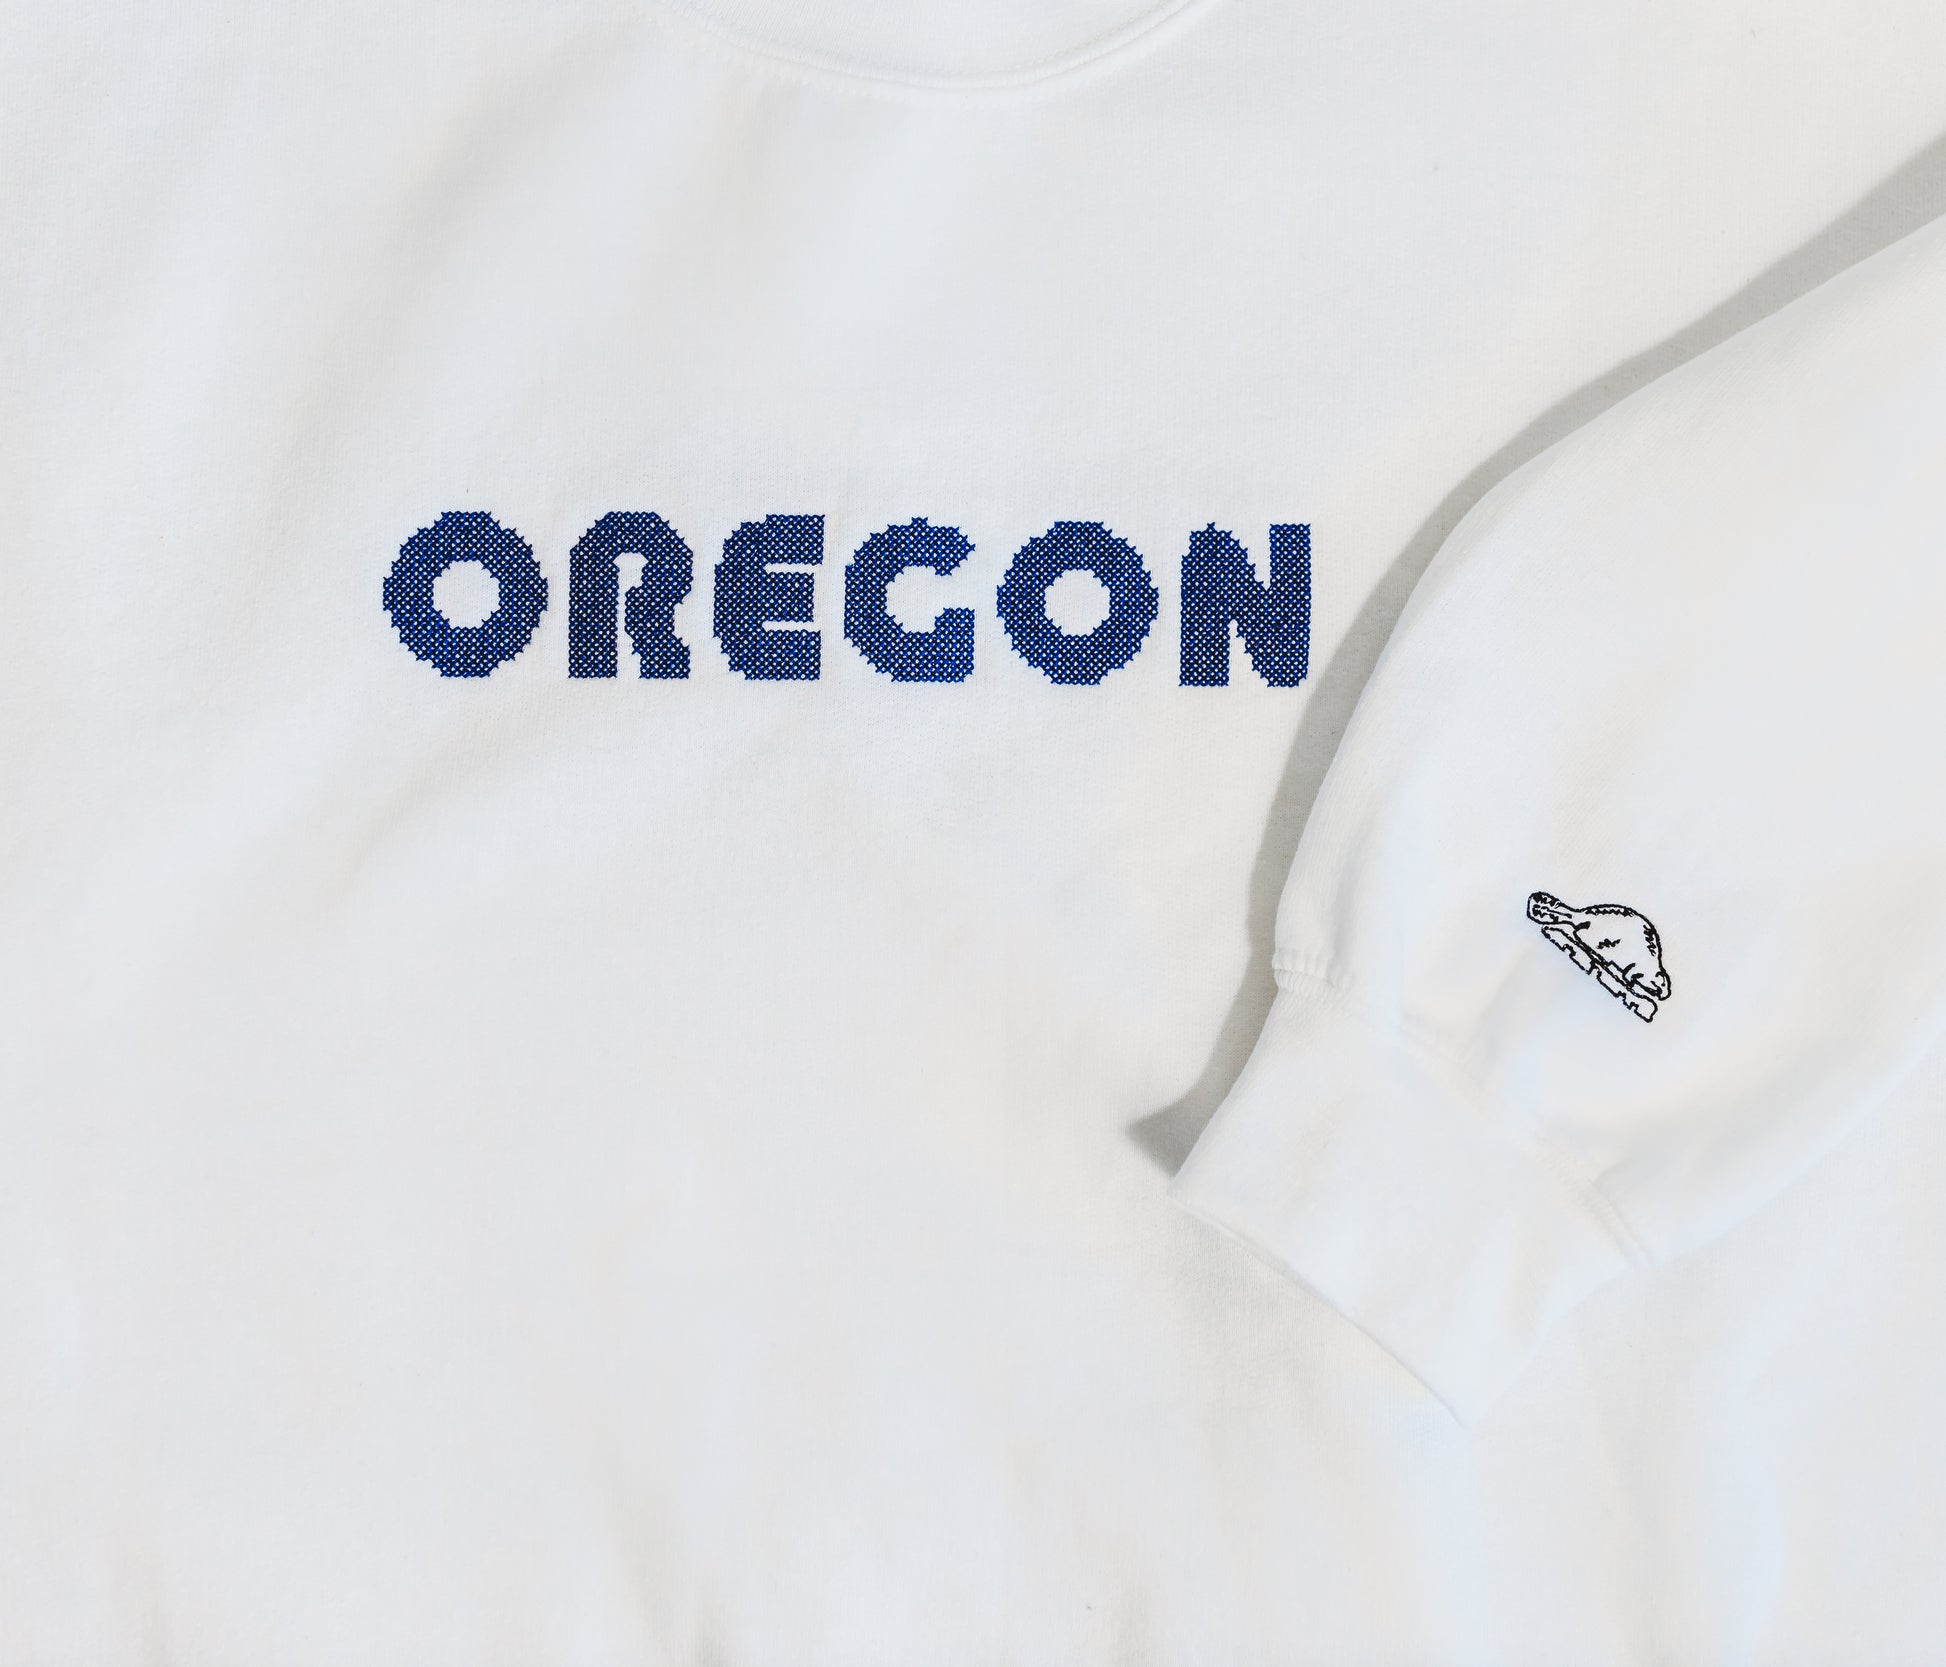 Oregon cross stitch embroidered on crewneck sweatshirt with embroidered beaver sleeve design